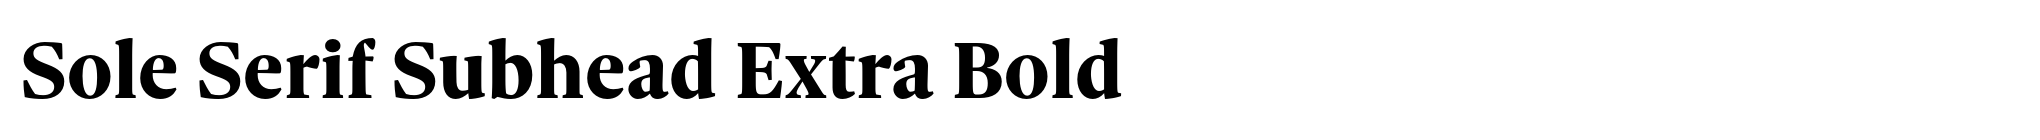 Sole Serif Subhead Extra Bold image